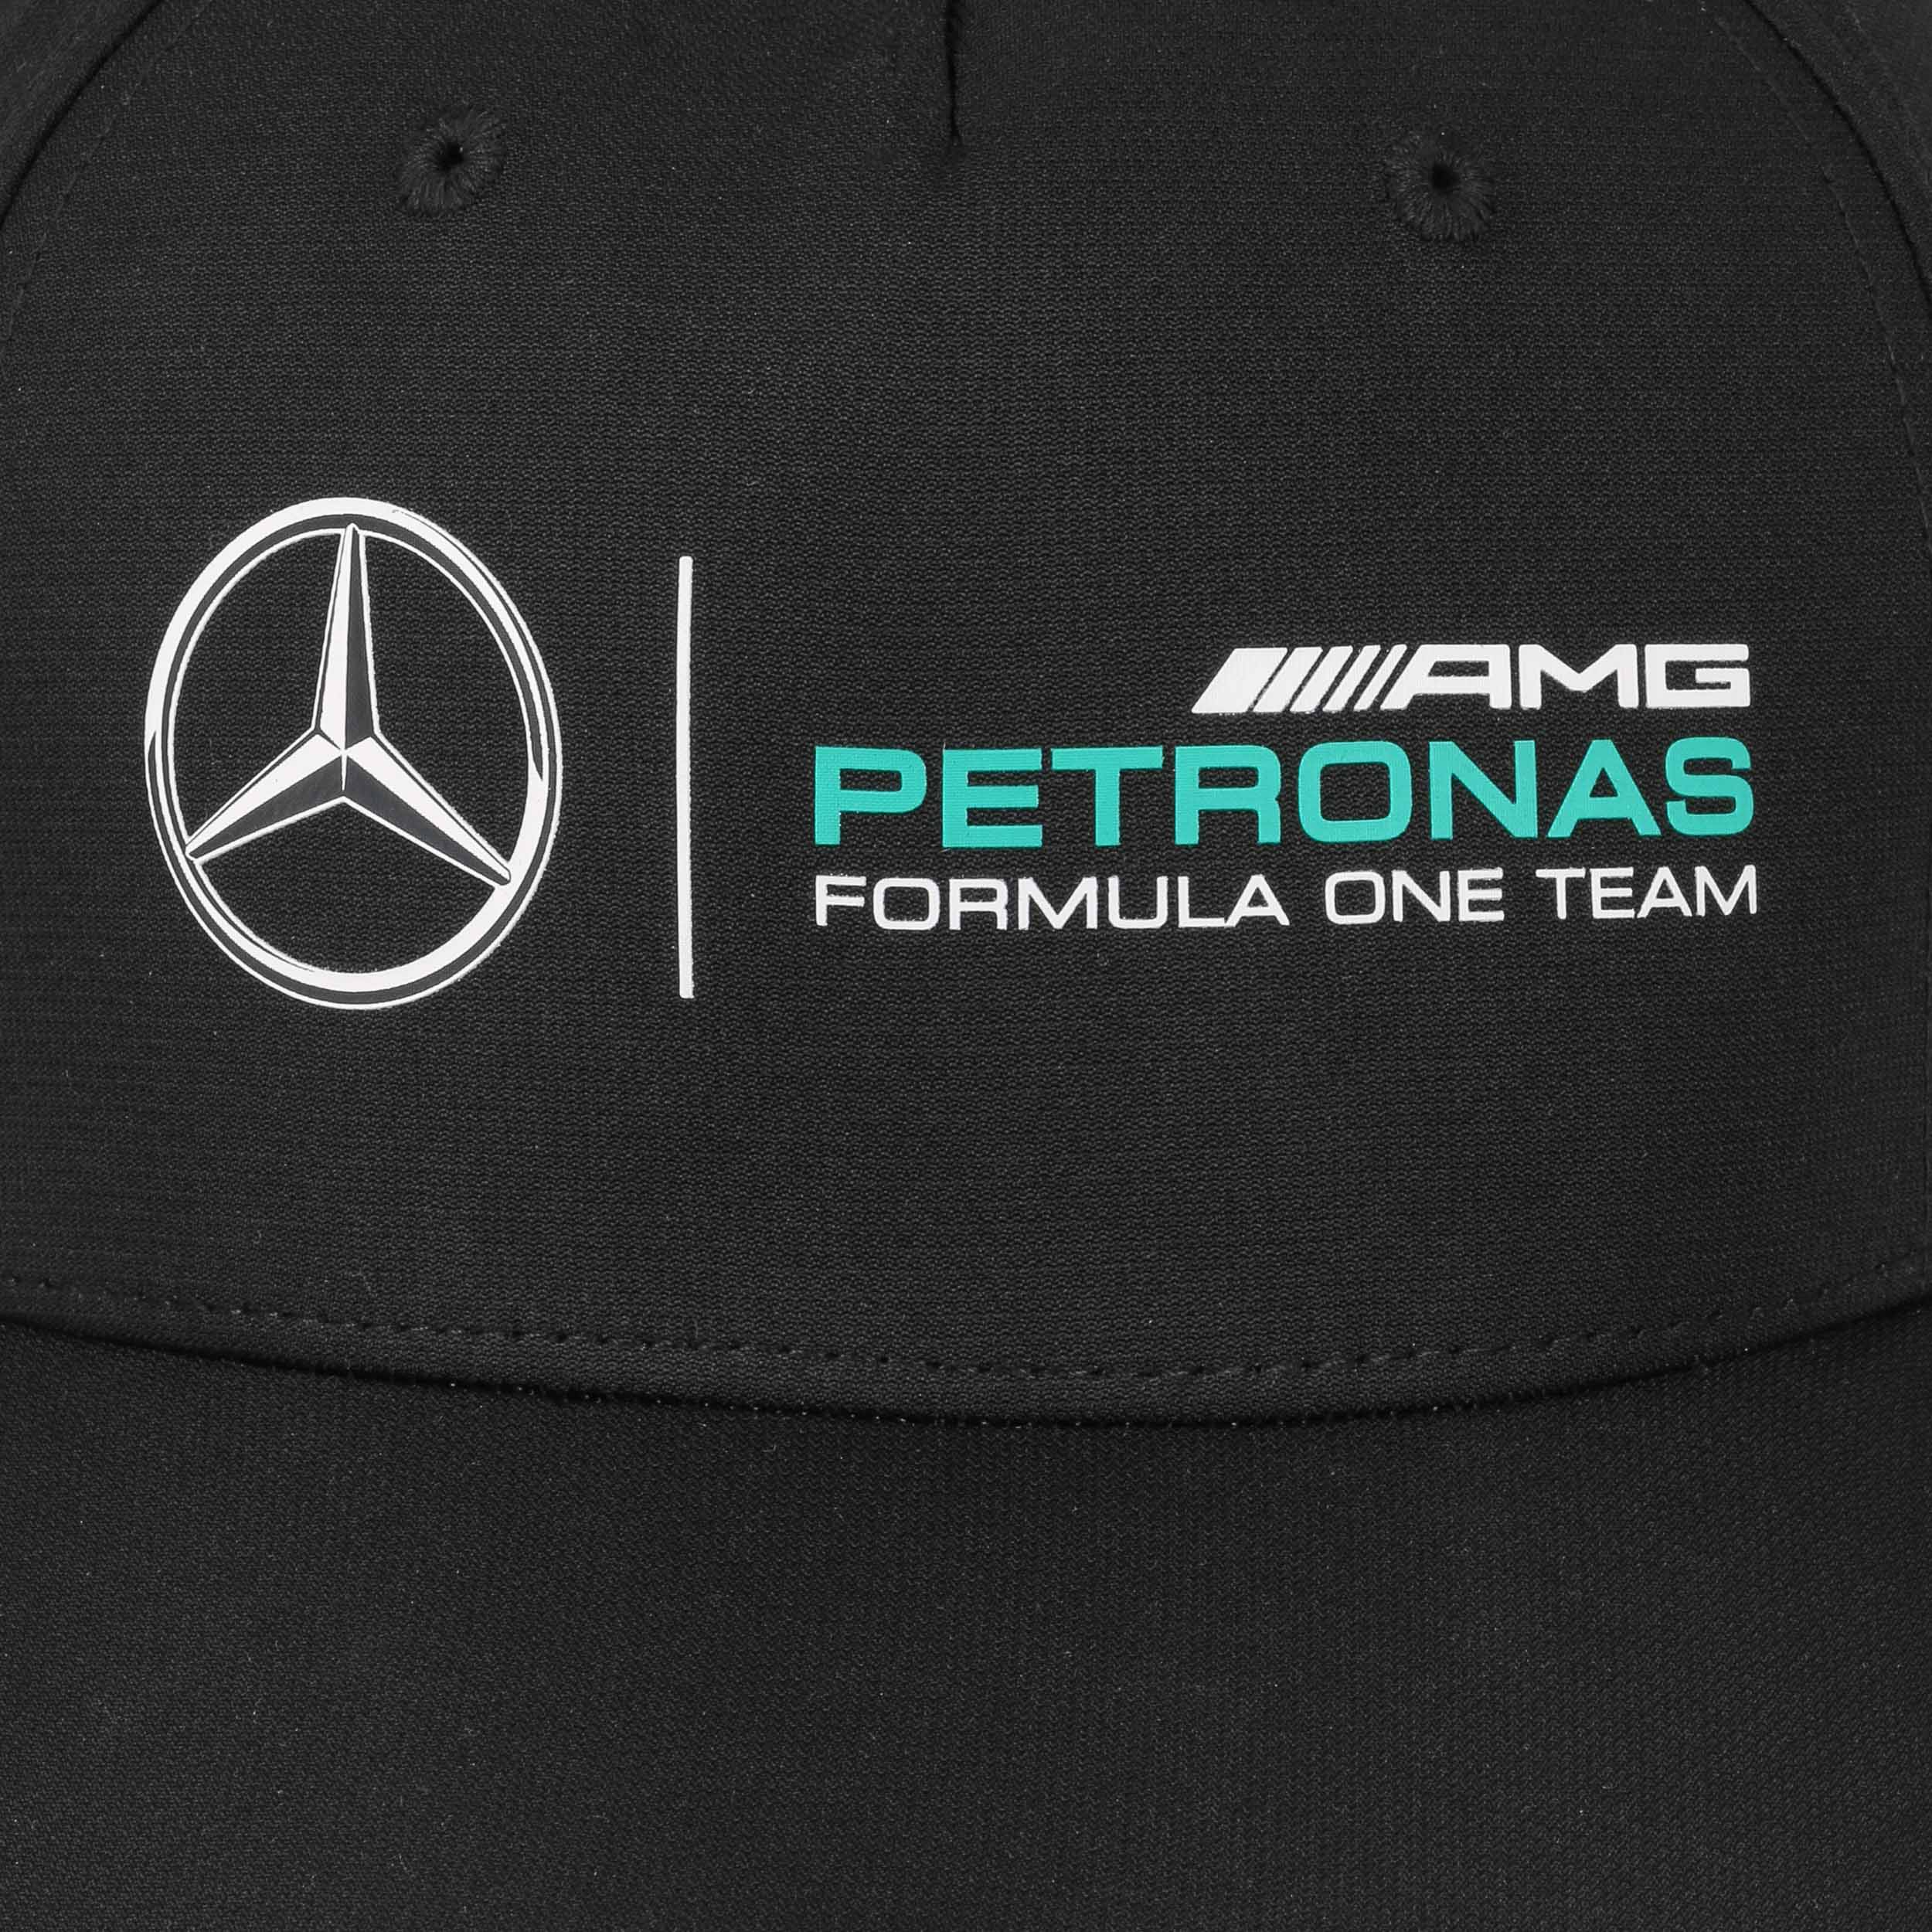 Cap by 29,95 AMG € - PUMA Mercedes Petronas